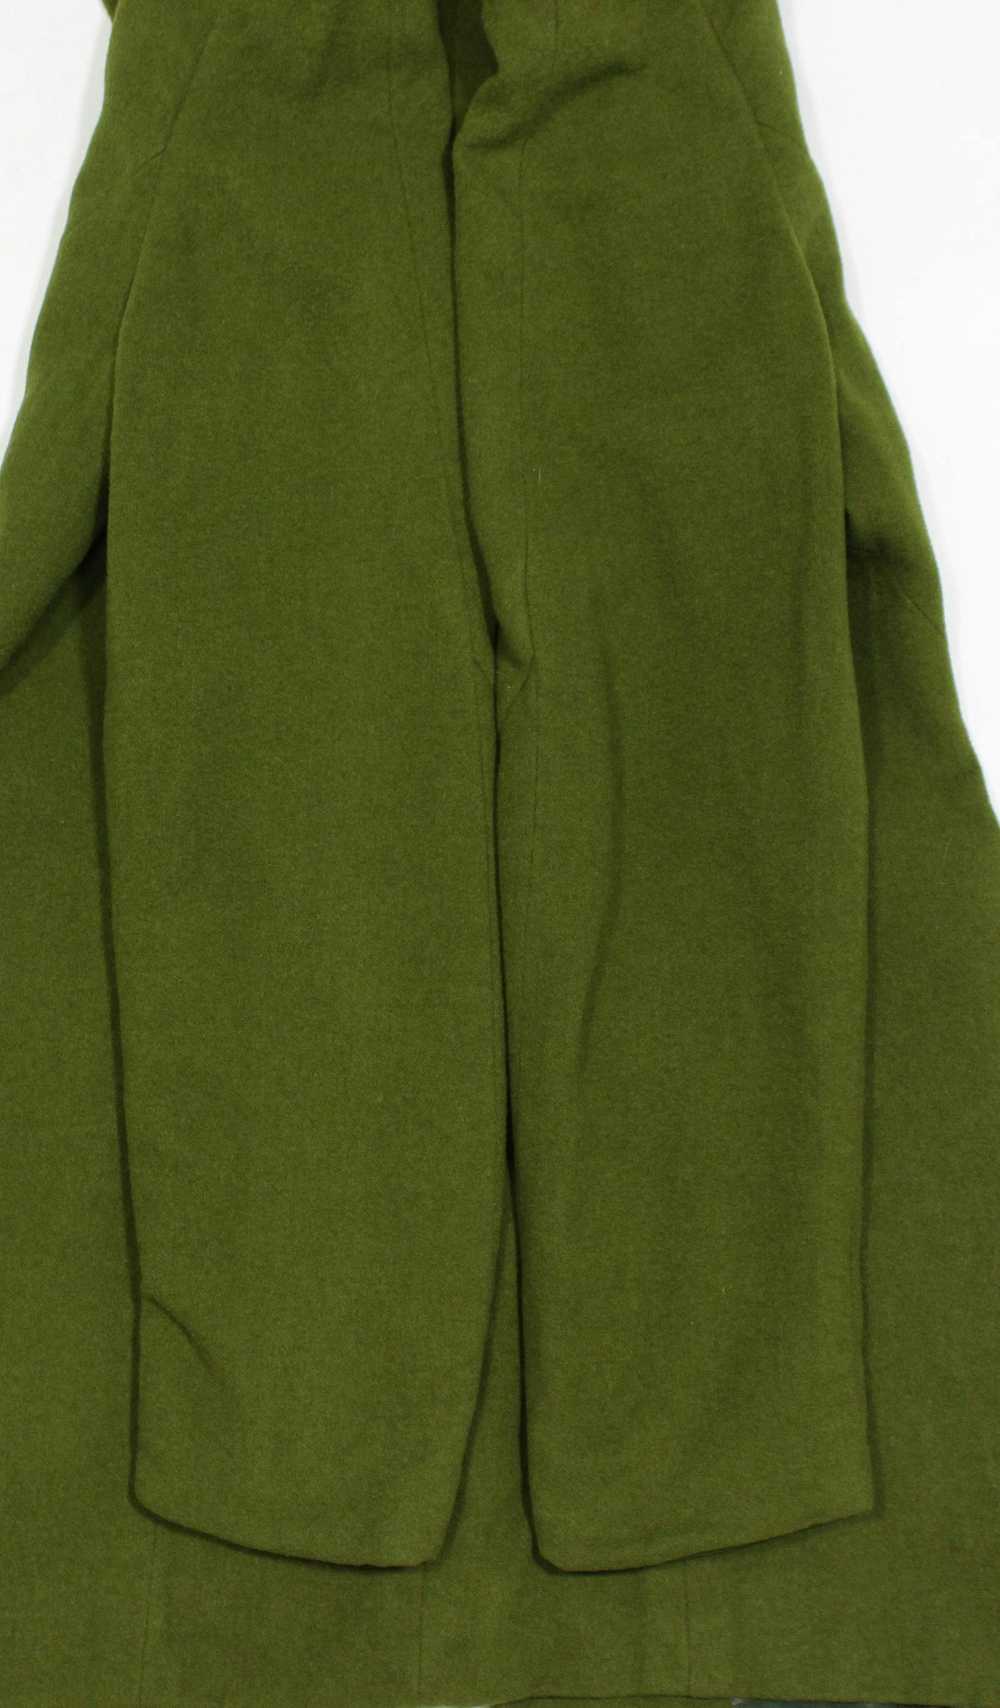 Jil Sander 90S Wool Green Short Coat Vintage - image 6